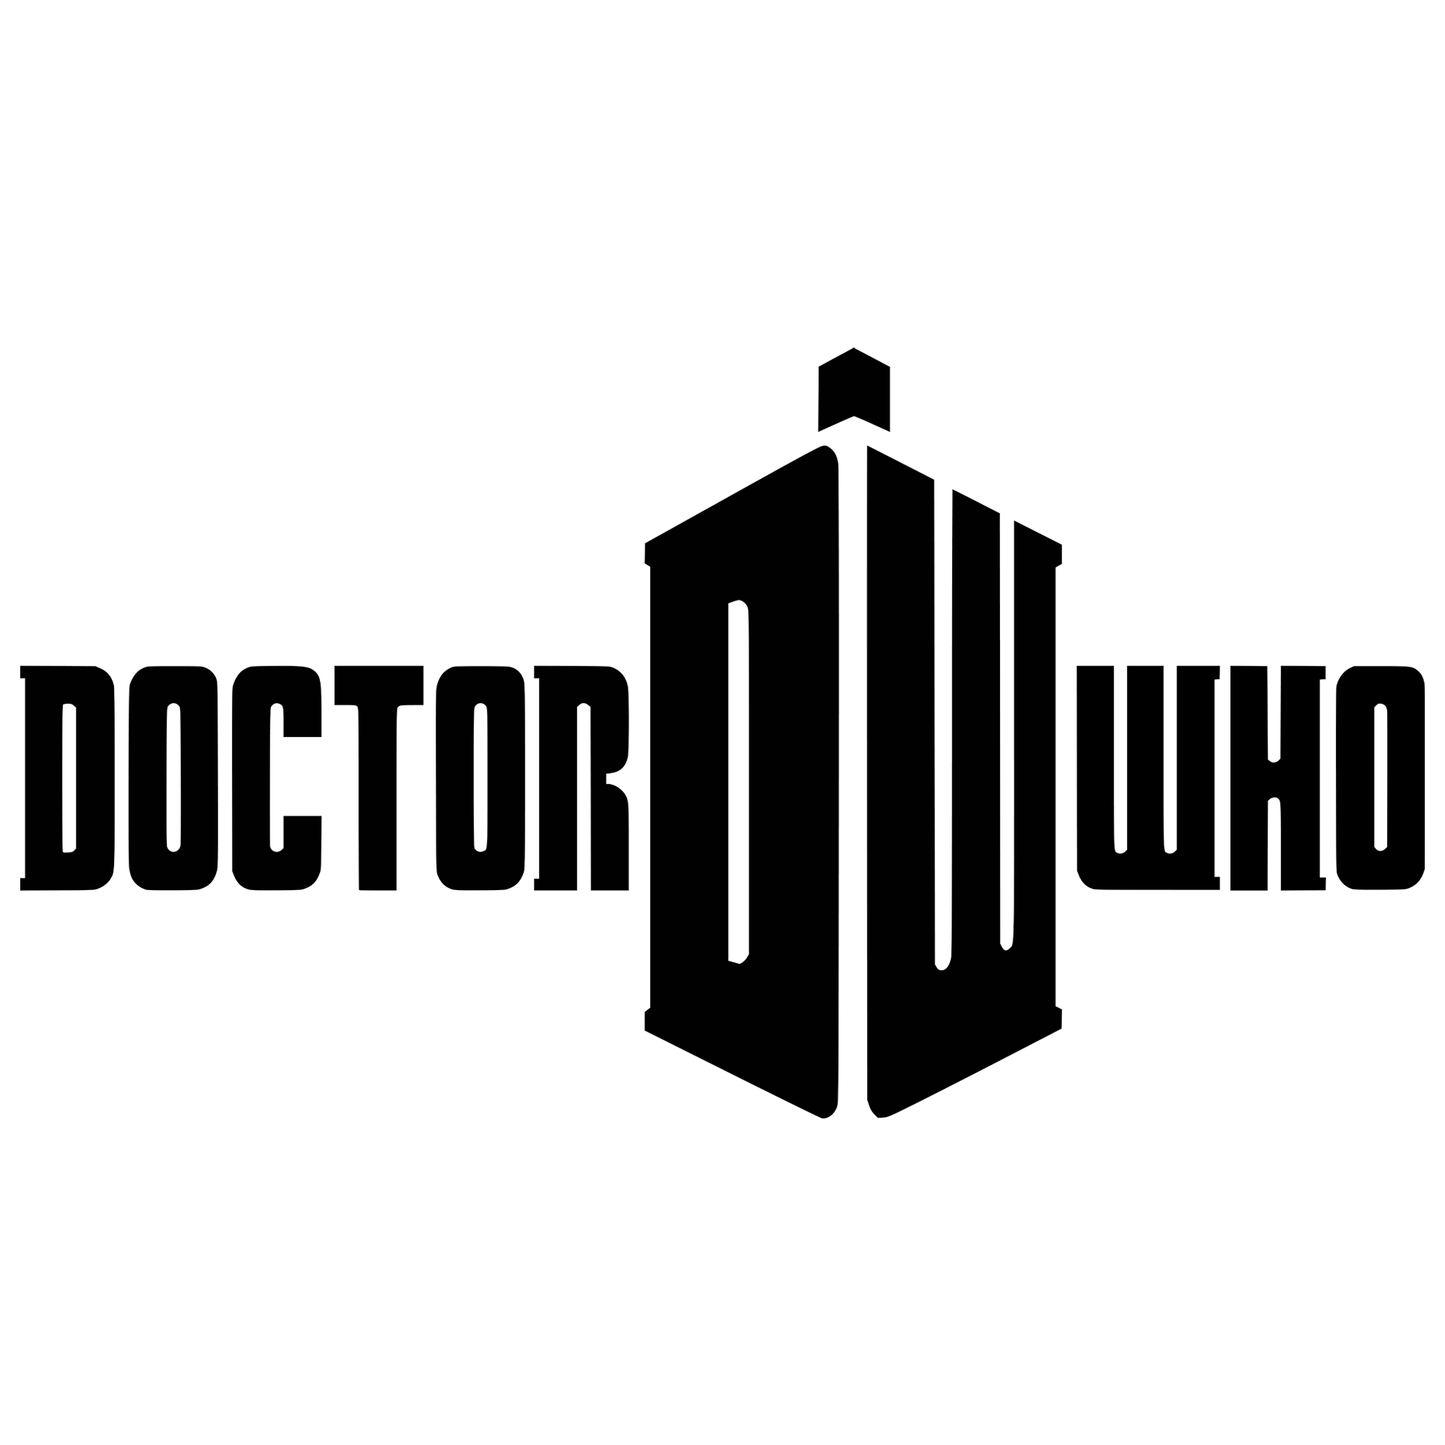 Doctor Who TARDIS Vinyl Decal Sticker